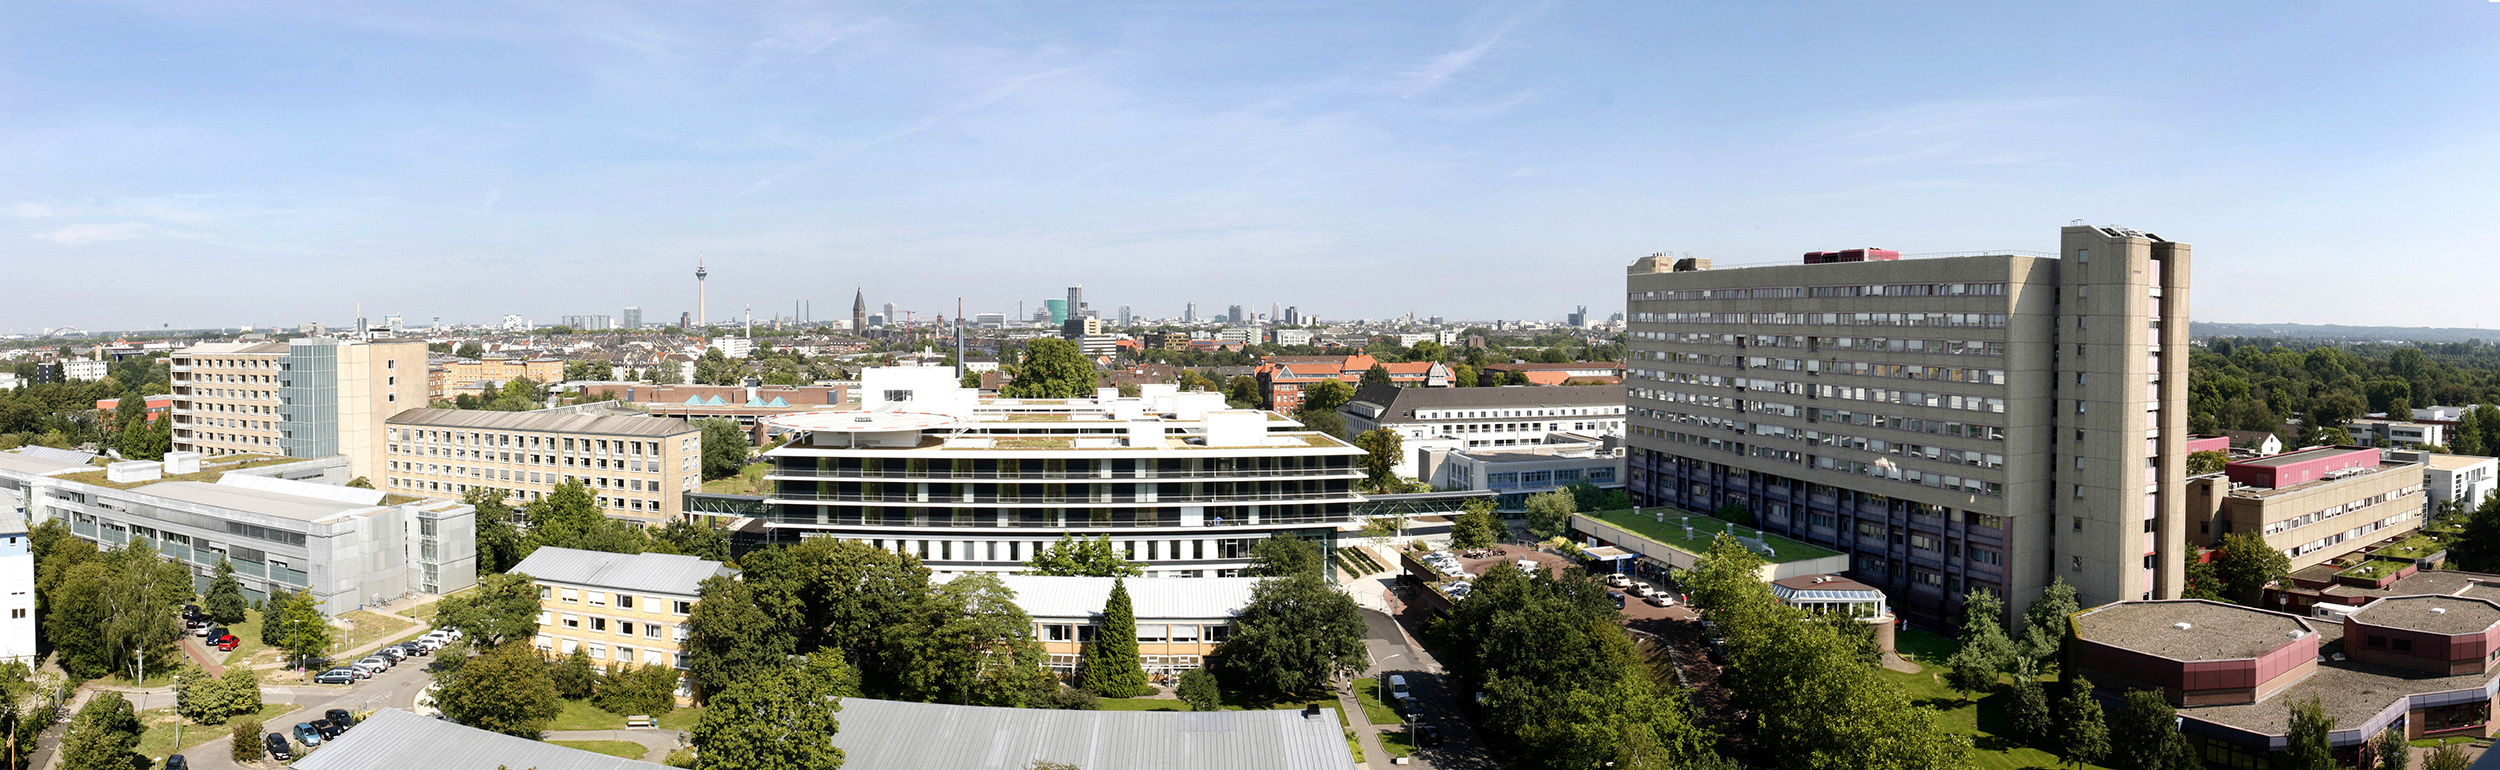 CURAC.2021 - German Society of Computer and Robot-assisted Surgery e. V.